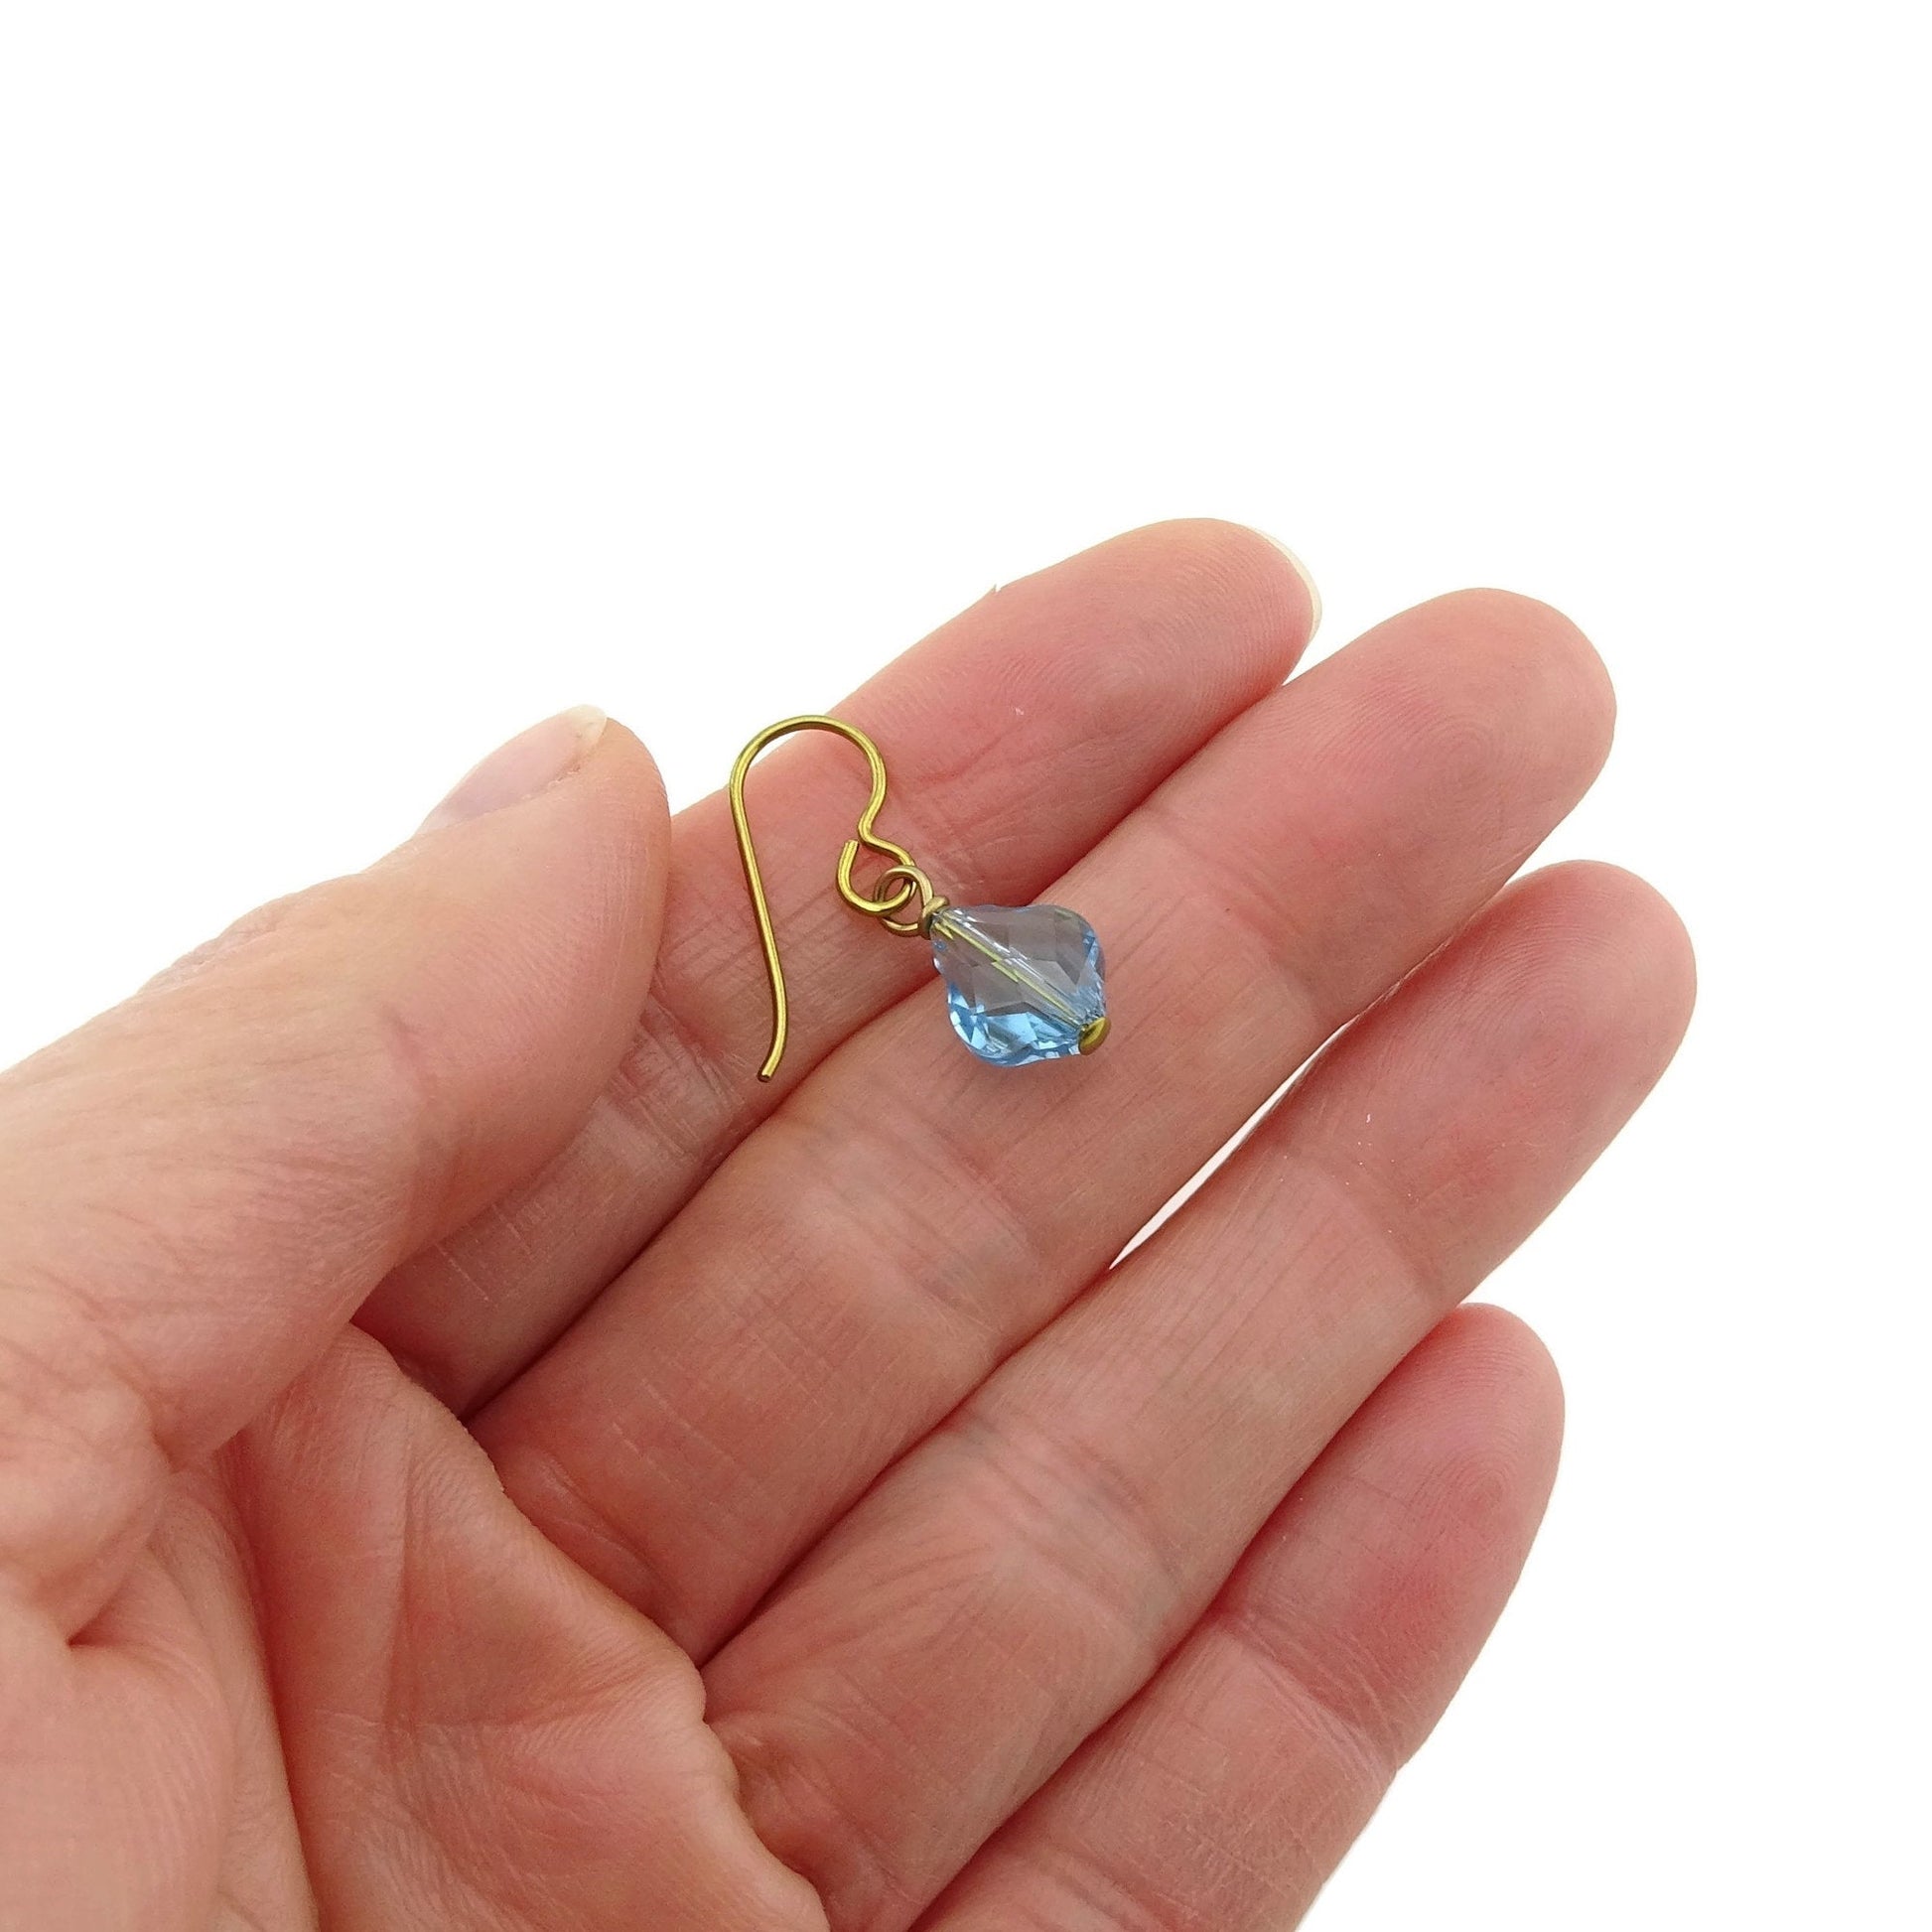 Aquamarine Crystal Earrings, Gold Niobium Earrings for Sensitive Ears, Light Blue Baroque Swarovski Crystal, Hypoallergenic and Nickel Free